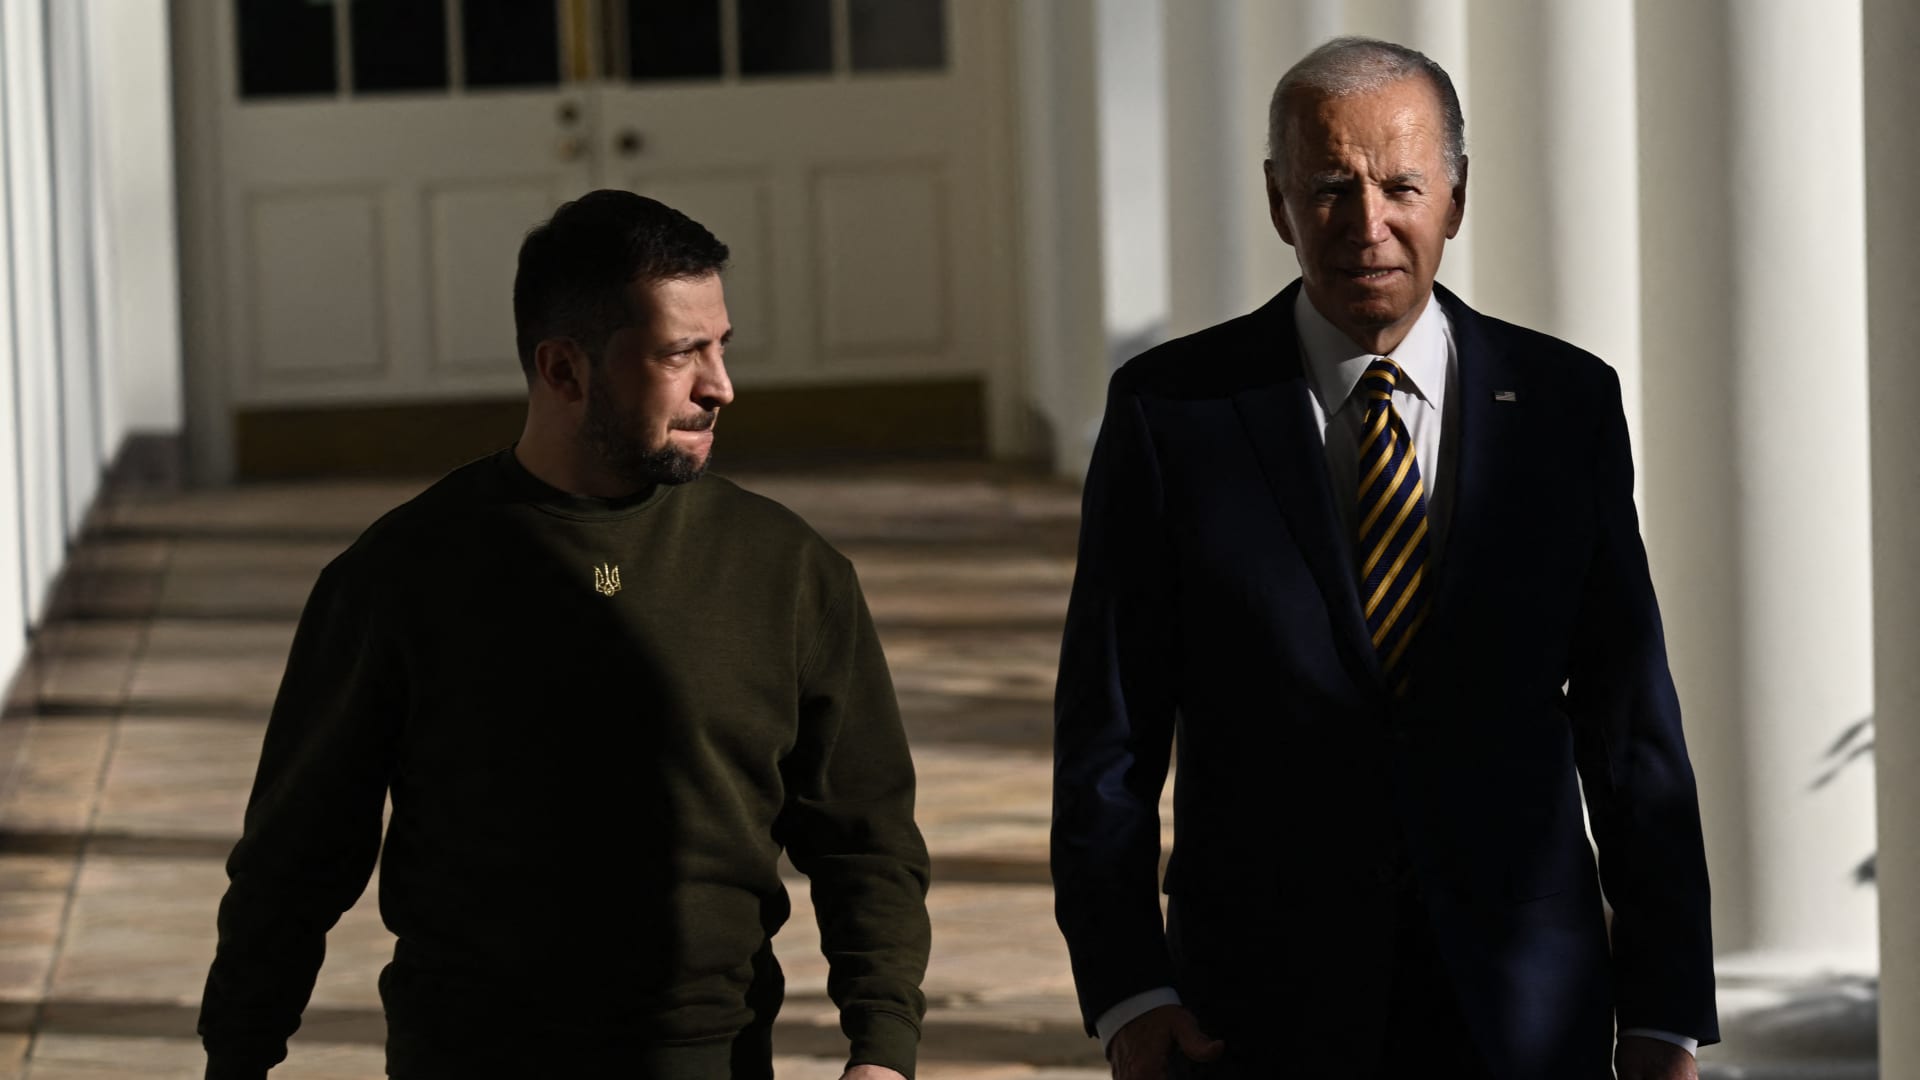 US President Joe Biden walks with Ukraine's President Volodymyr Zelenskyy through the colonnade of the White House, in Washington, DC on December 21, 2022.